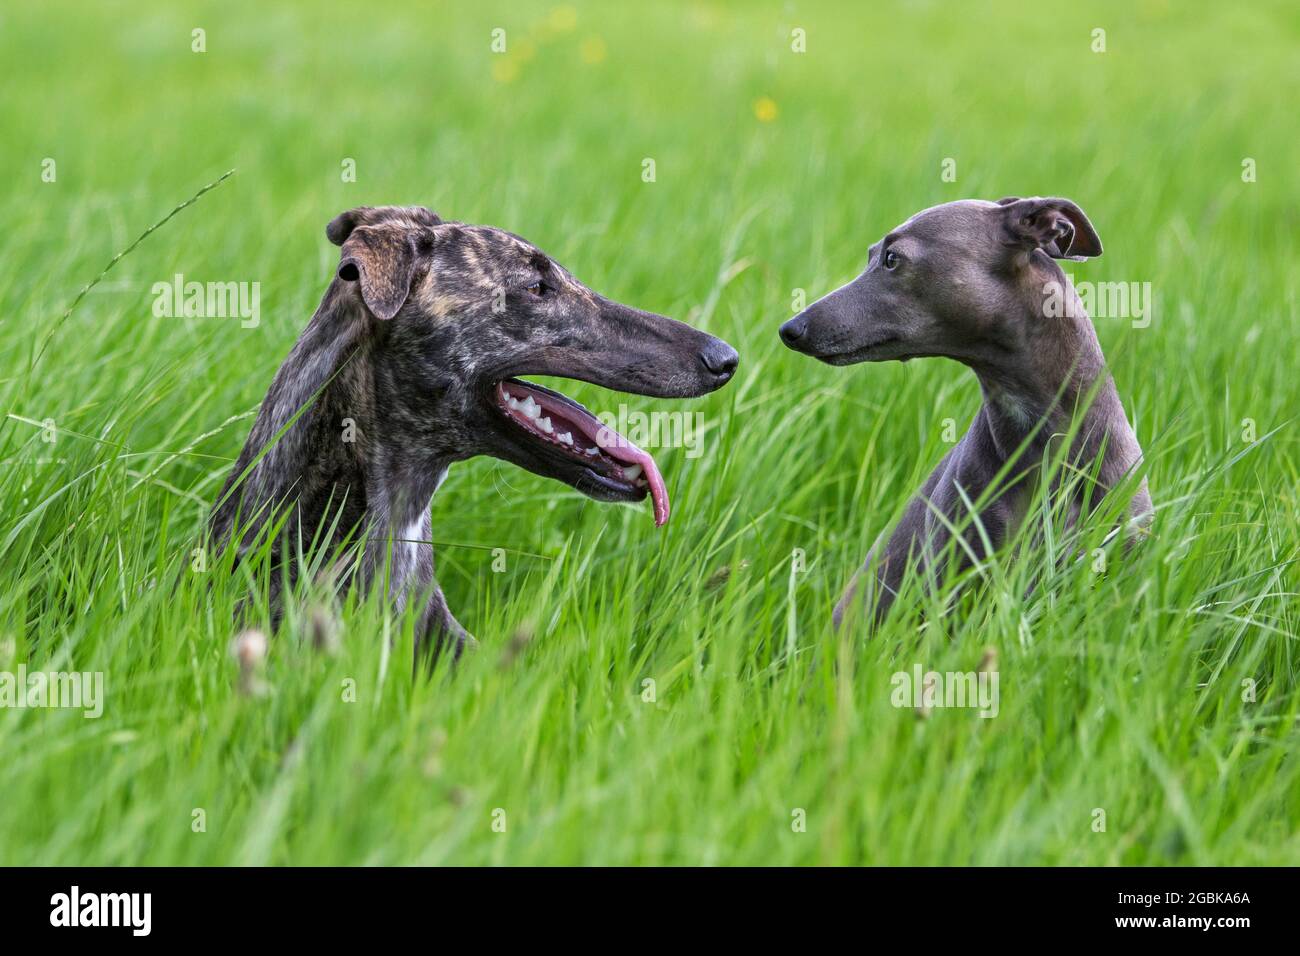 Brindled rough-coated Galgo Español / barcino Spanish galgo / Spanish sighthound and Italian Greyhound / Piccolo levriero Italiano in field Stock Photo